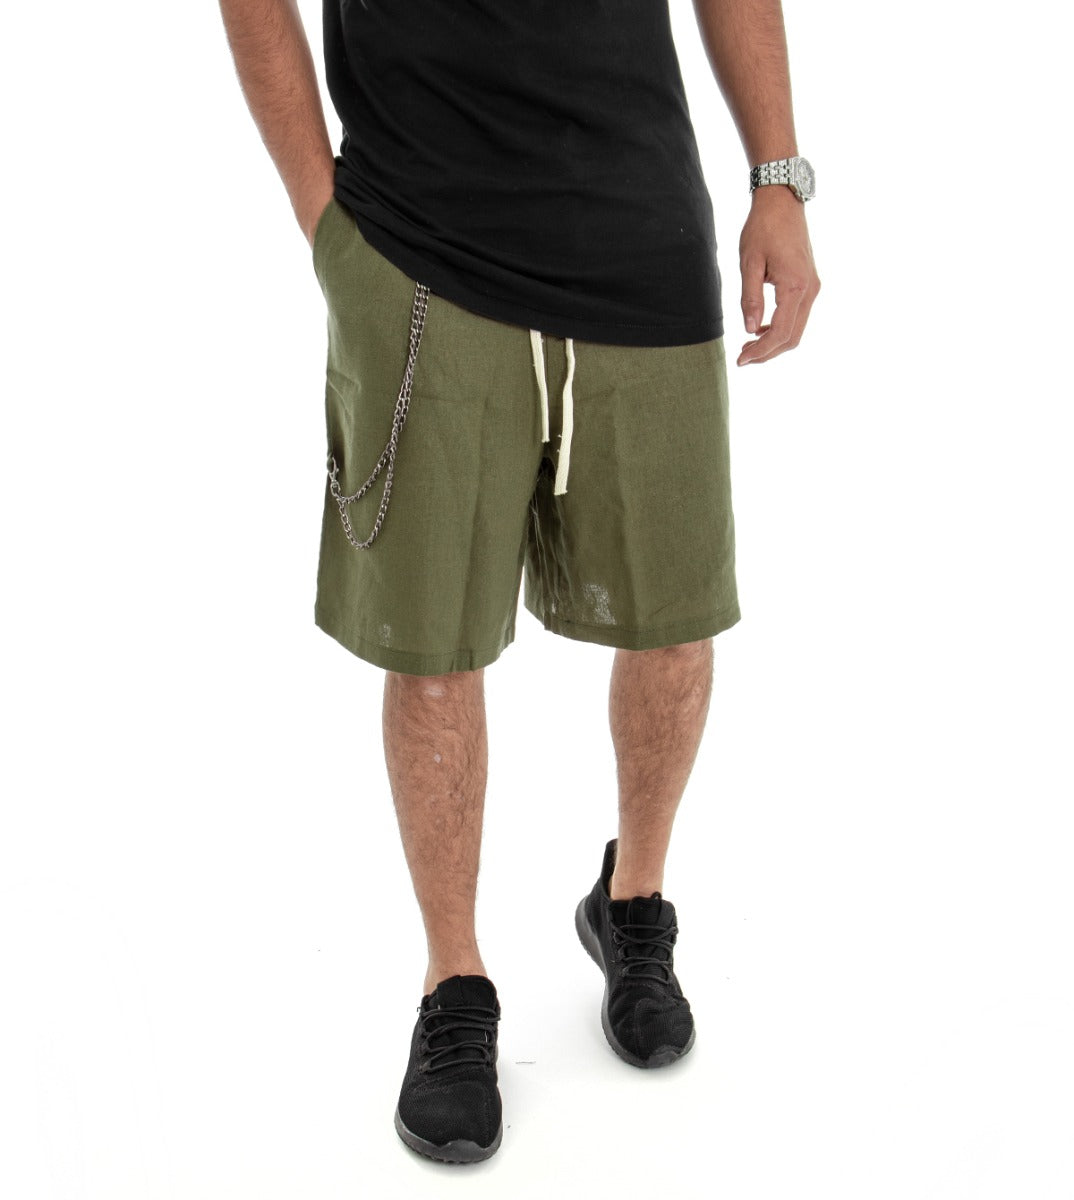 Bermuda Pantaloncino Uomo Corto Lino Tinta Unita Verde Elastico in Vita GIOSAL-PC1461A